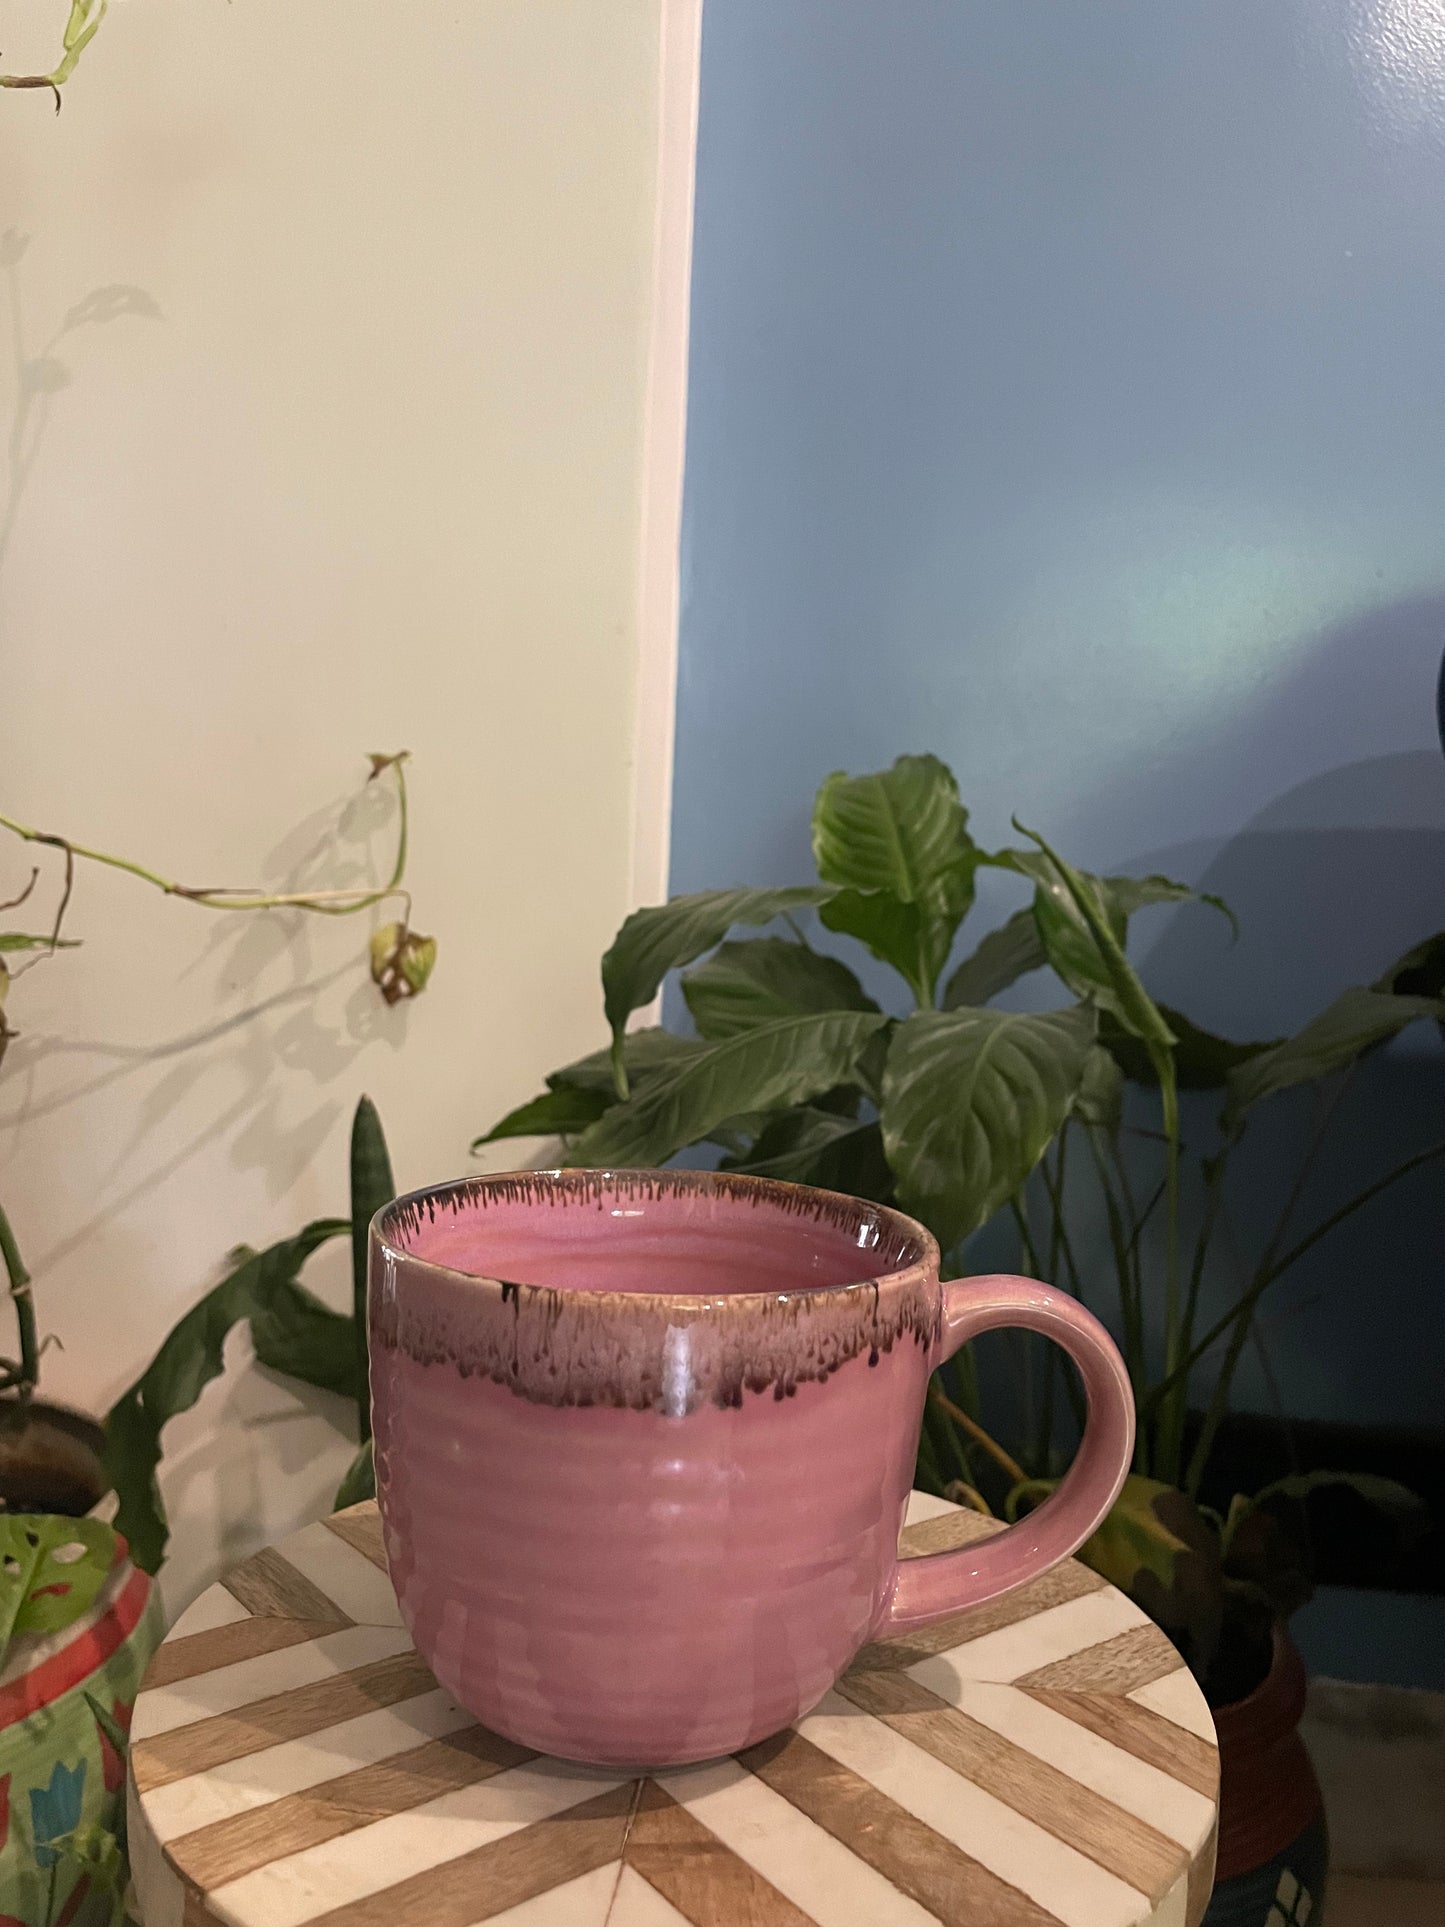 Large pink glaze ceramic rounded mug with brown drip detailing, on round chevron designed table with plants. Buy luxury ceramics Bangalore.